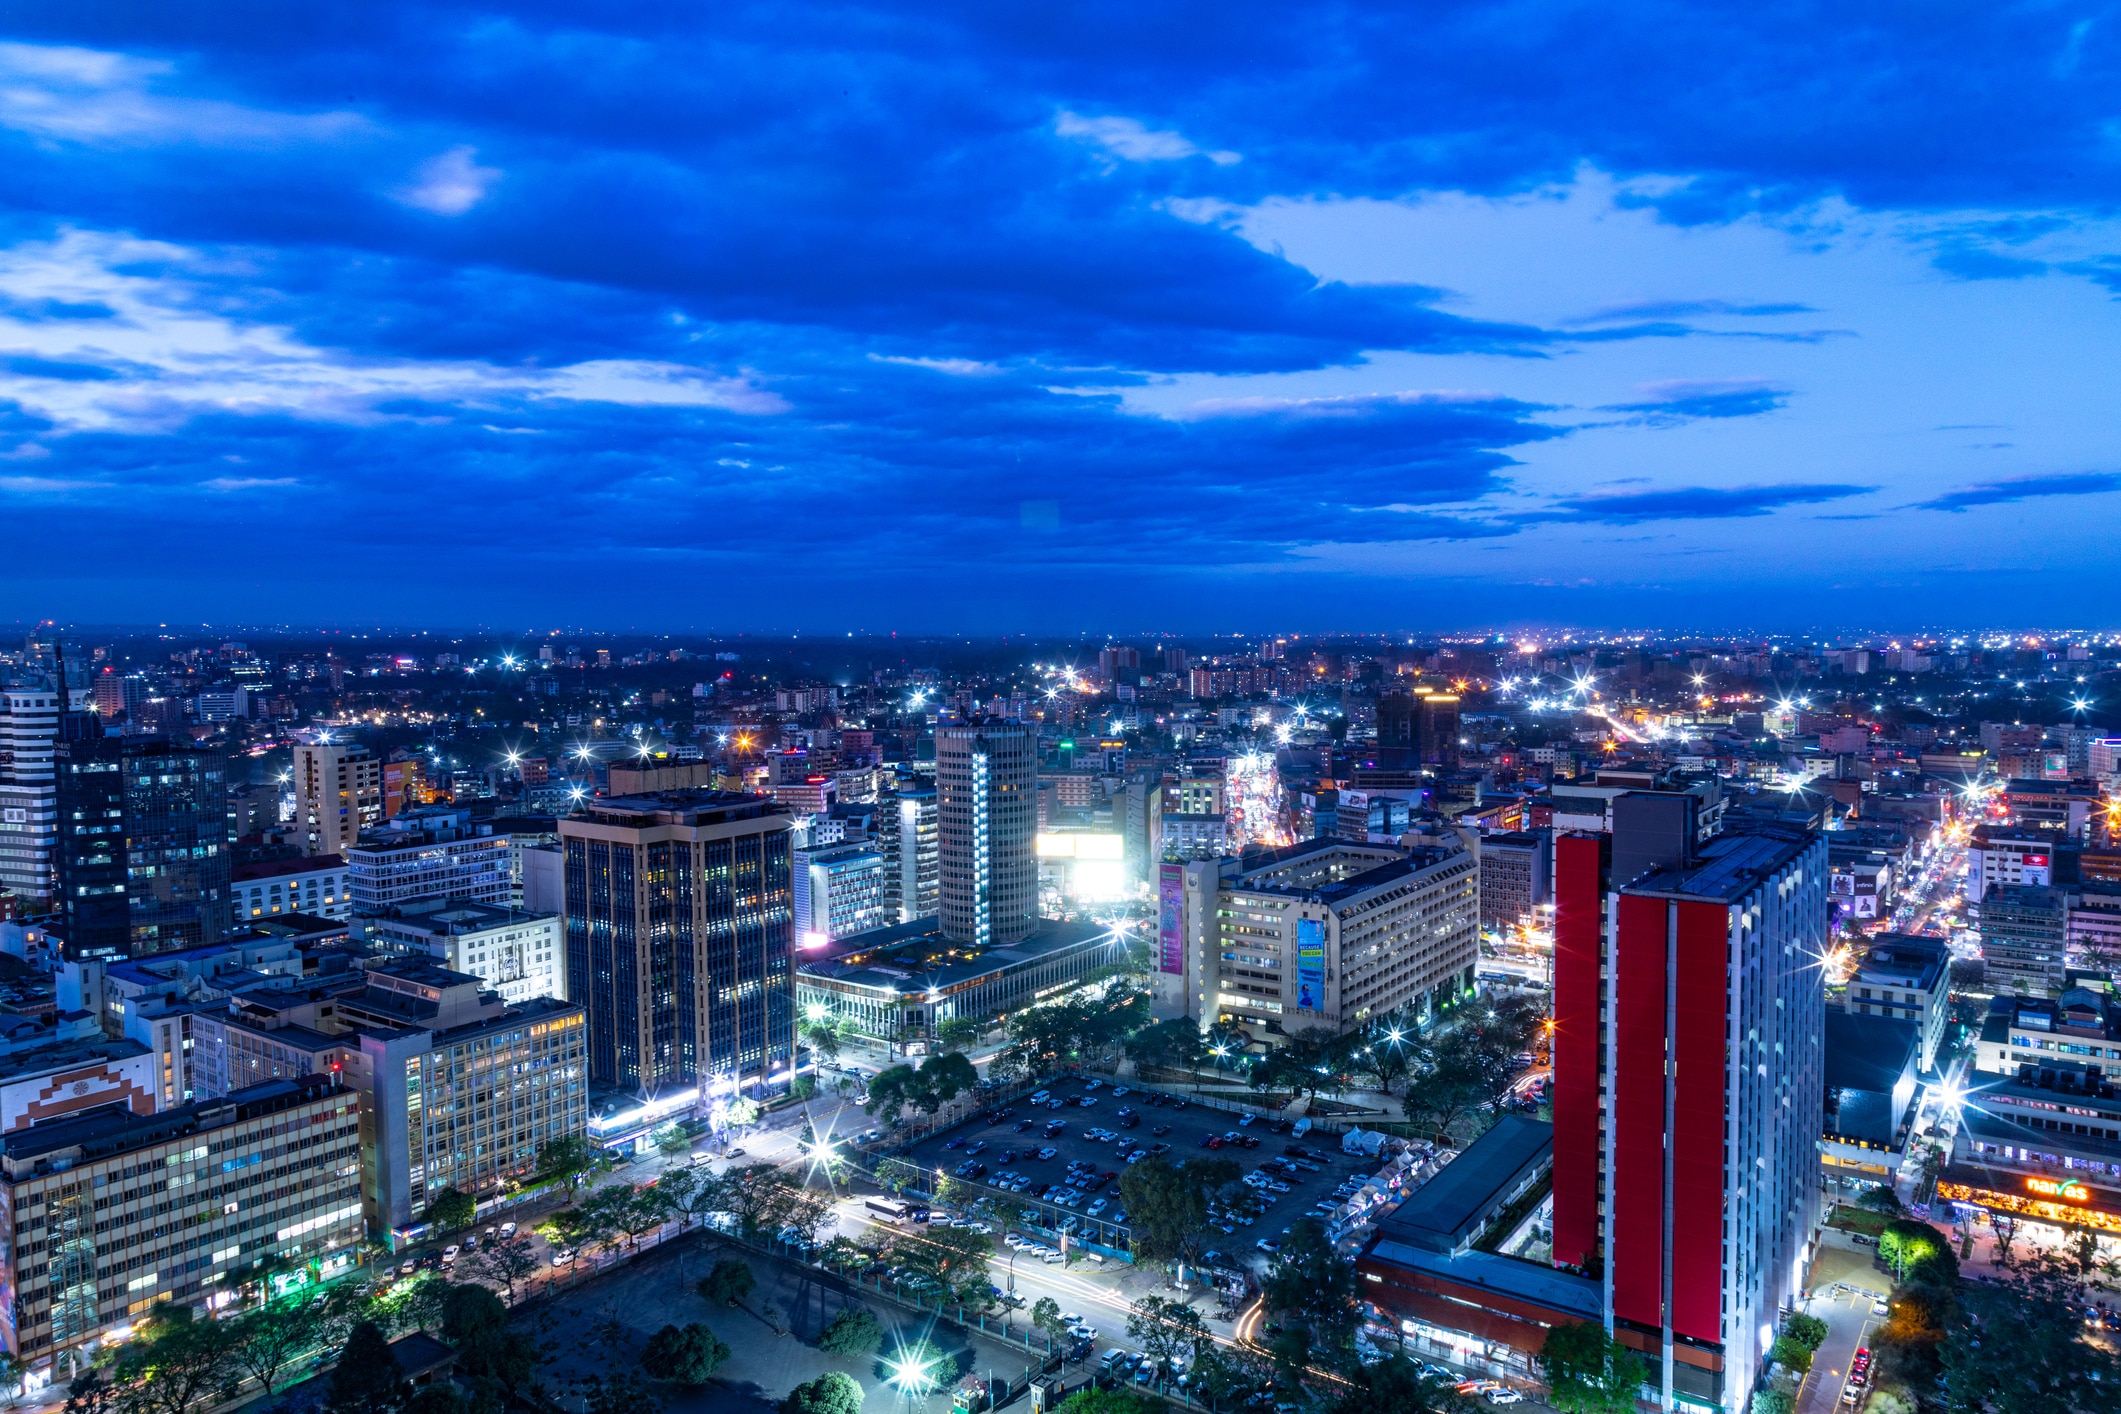 Aerial view of illuminated city buildings against sky at night,Nairobi,Kenya